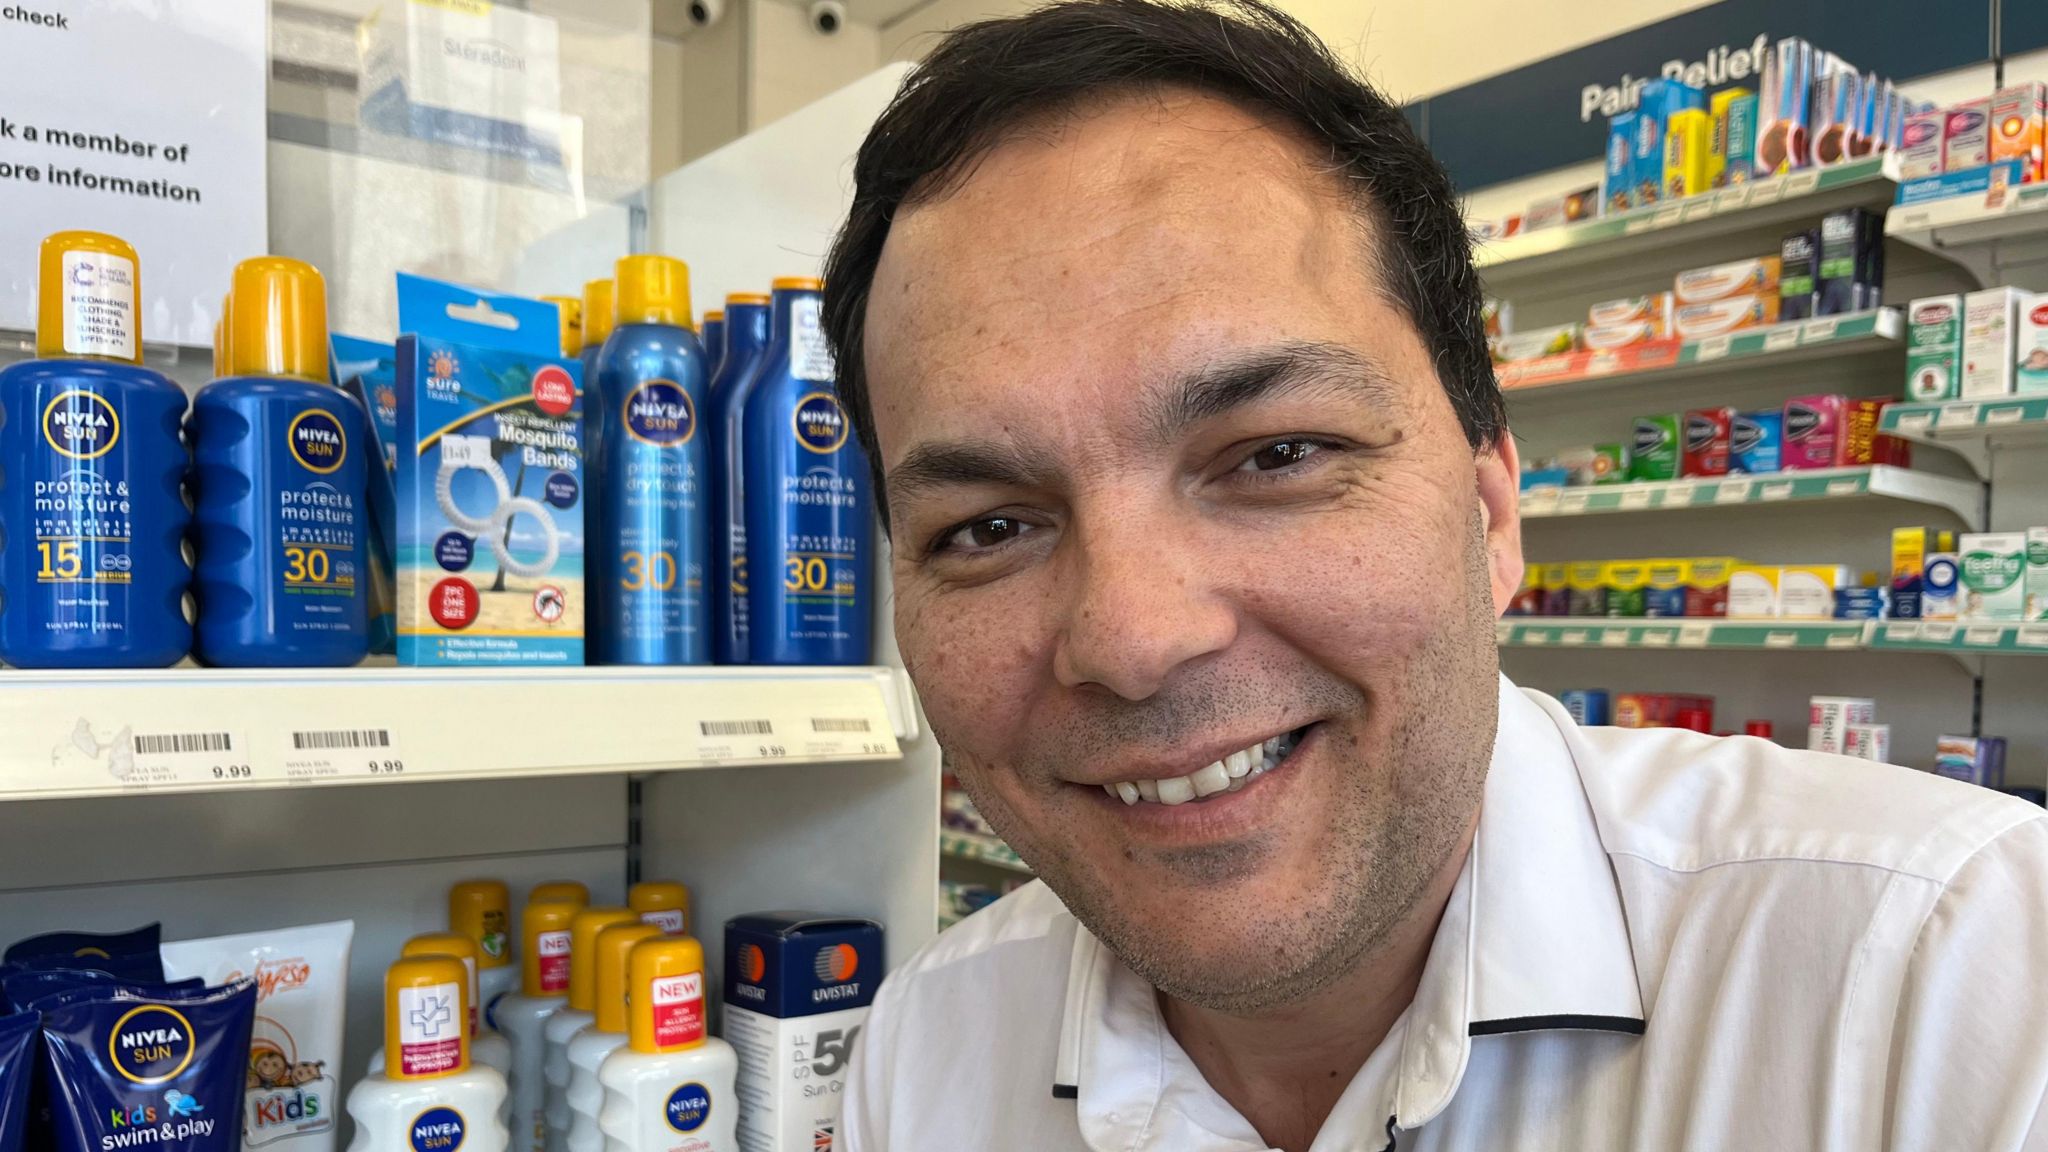 Mansour Dadkhah smiling in his pharmacy 